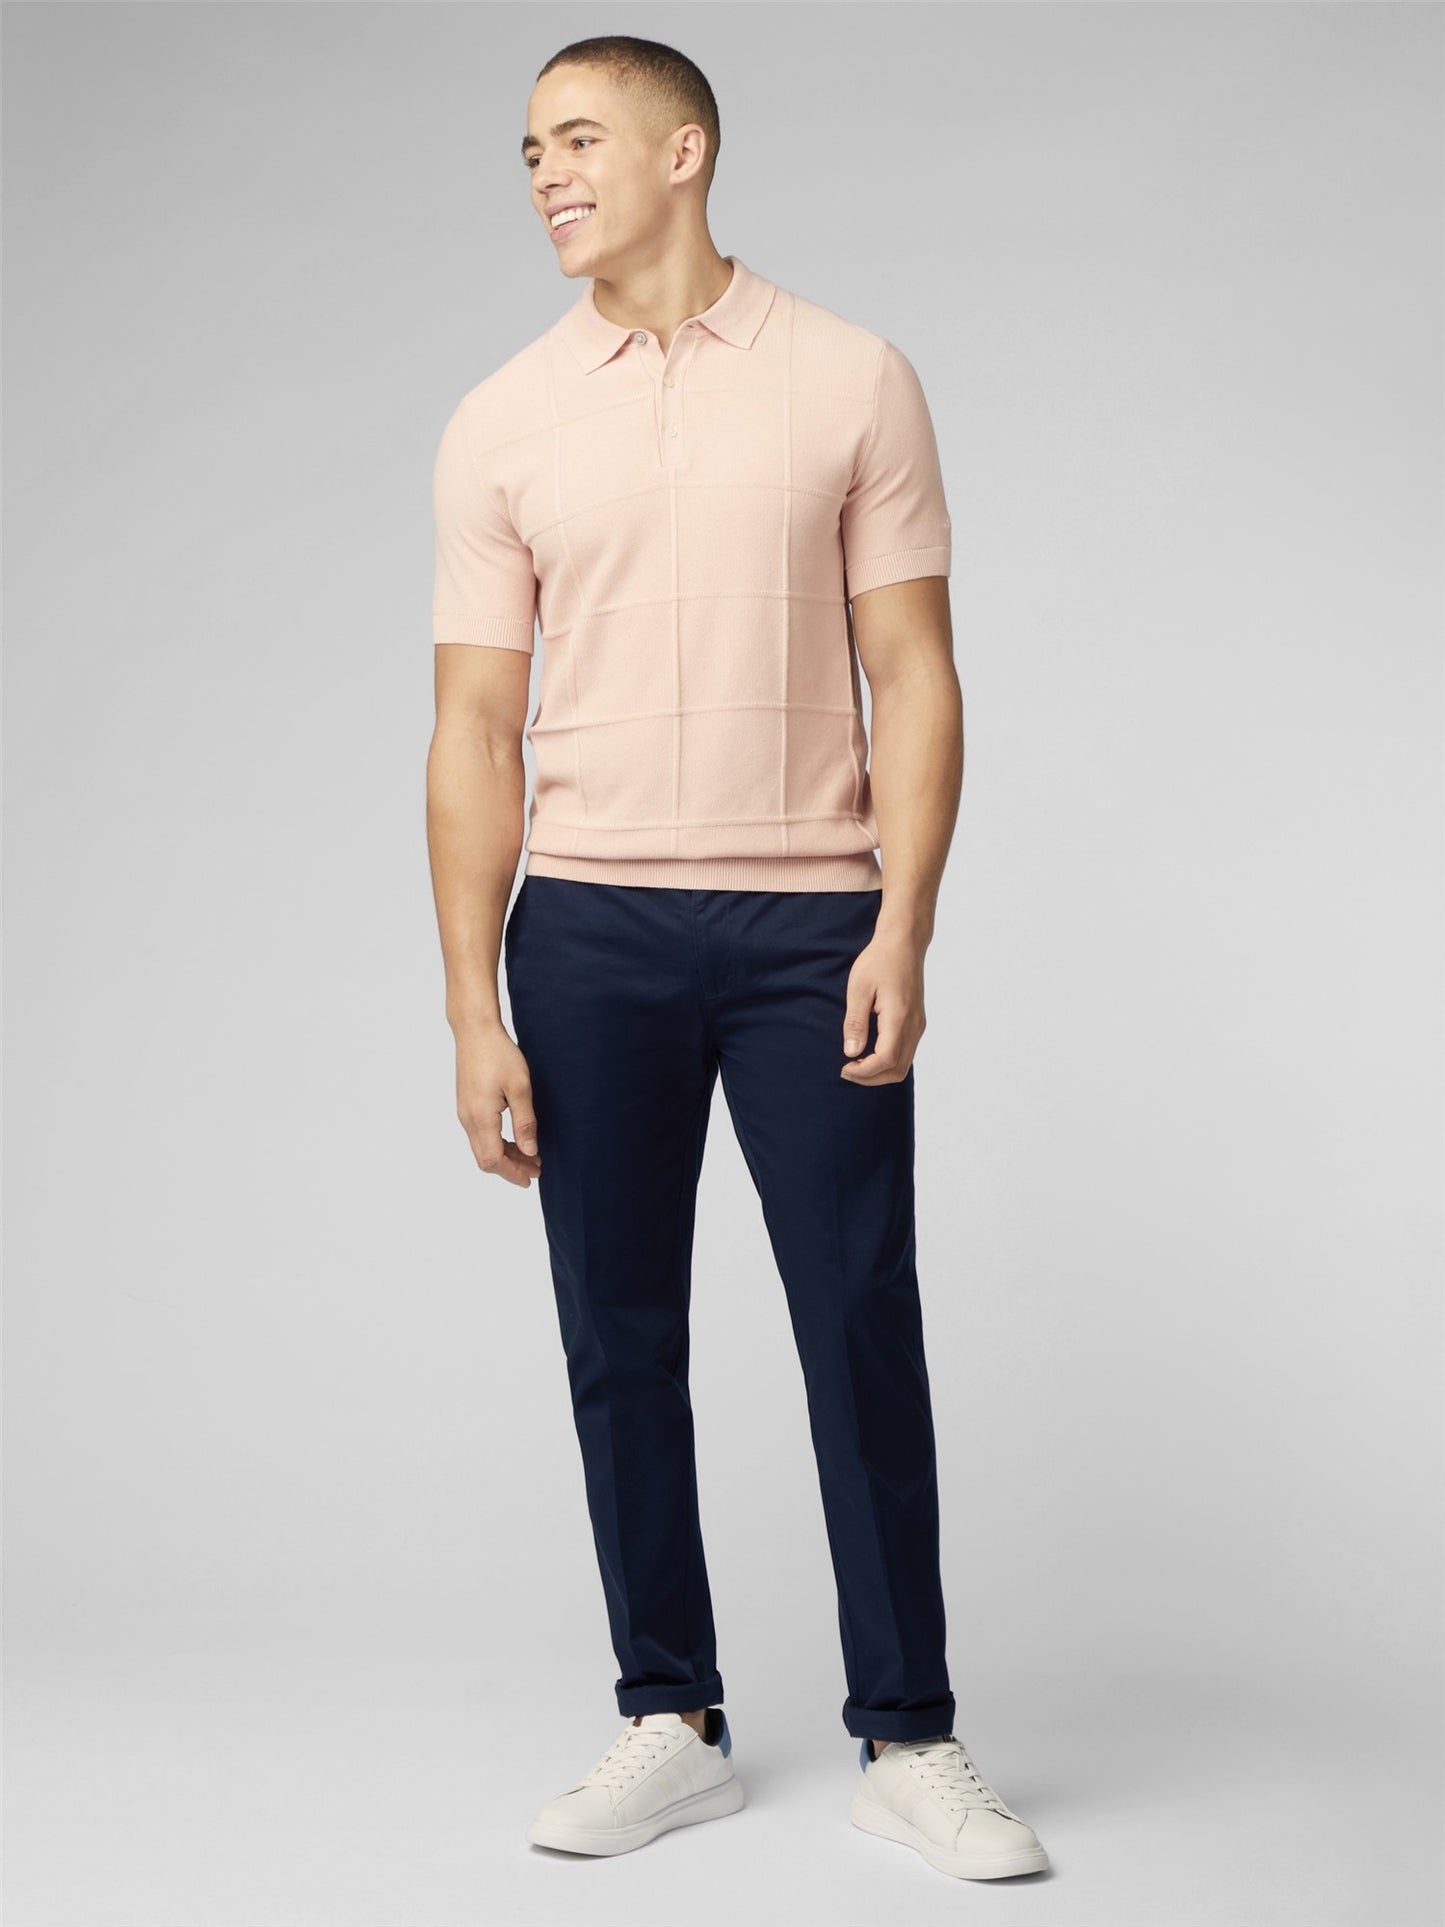 Ben Sherman Men's 0075860 SS Textured Polo Shirt Pale Pink